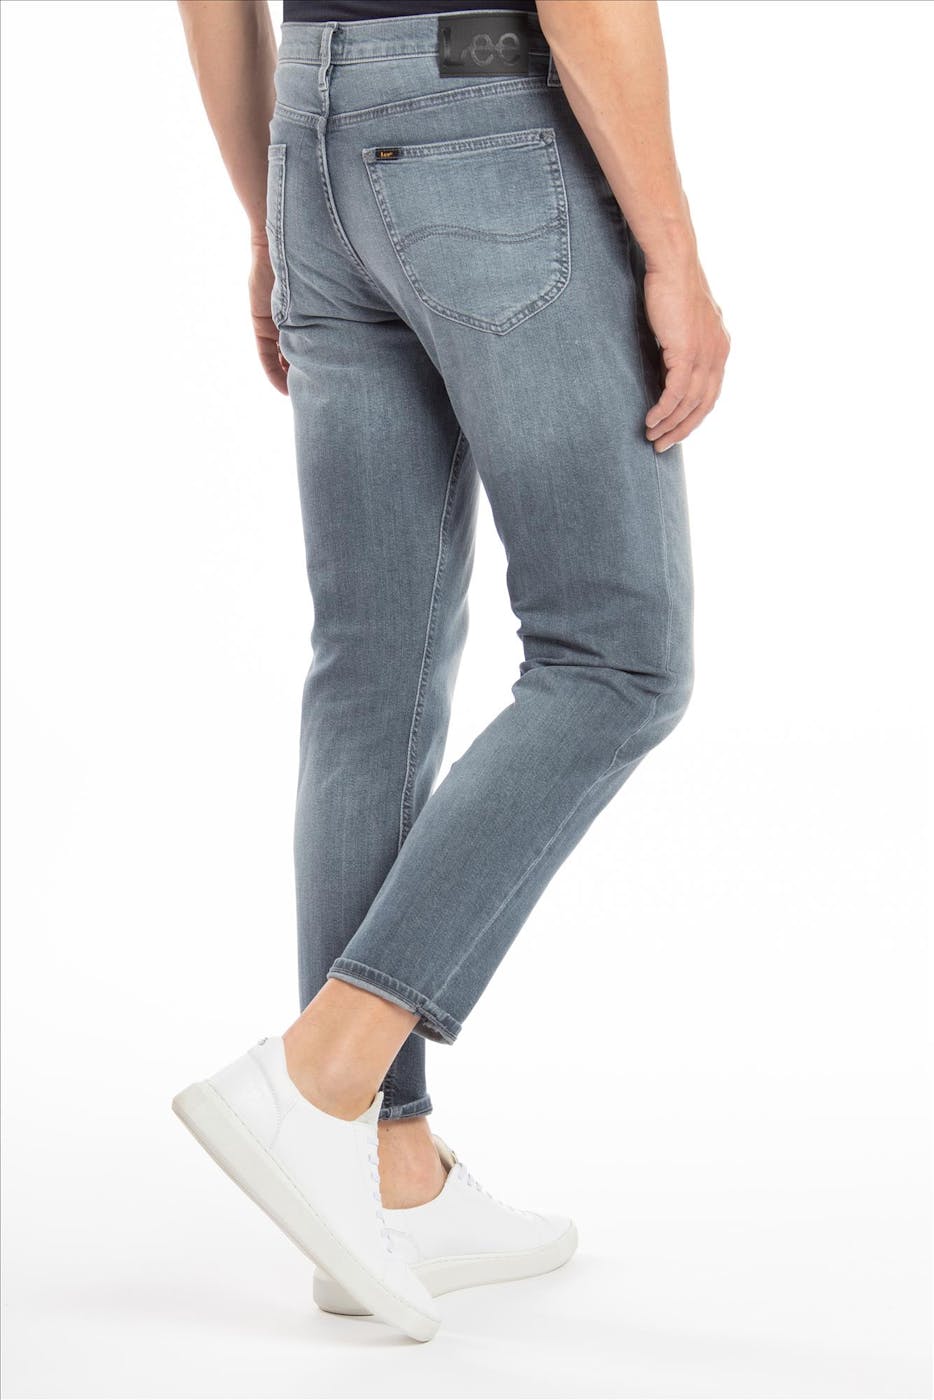 Lee - Blauwgrijze Austin straight tapered jeans